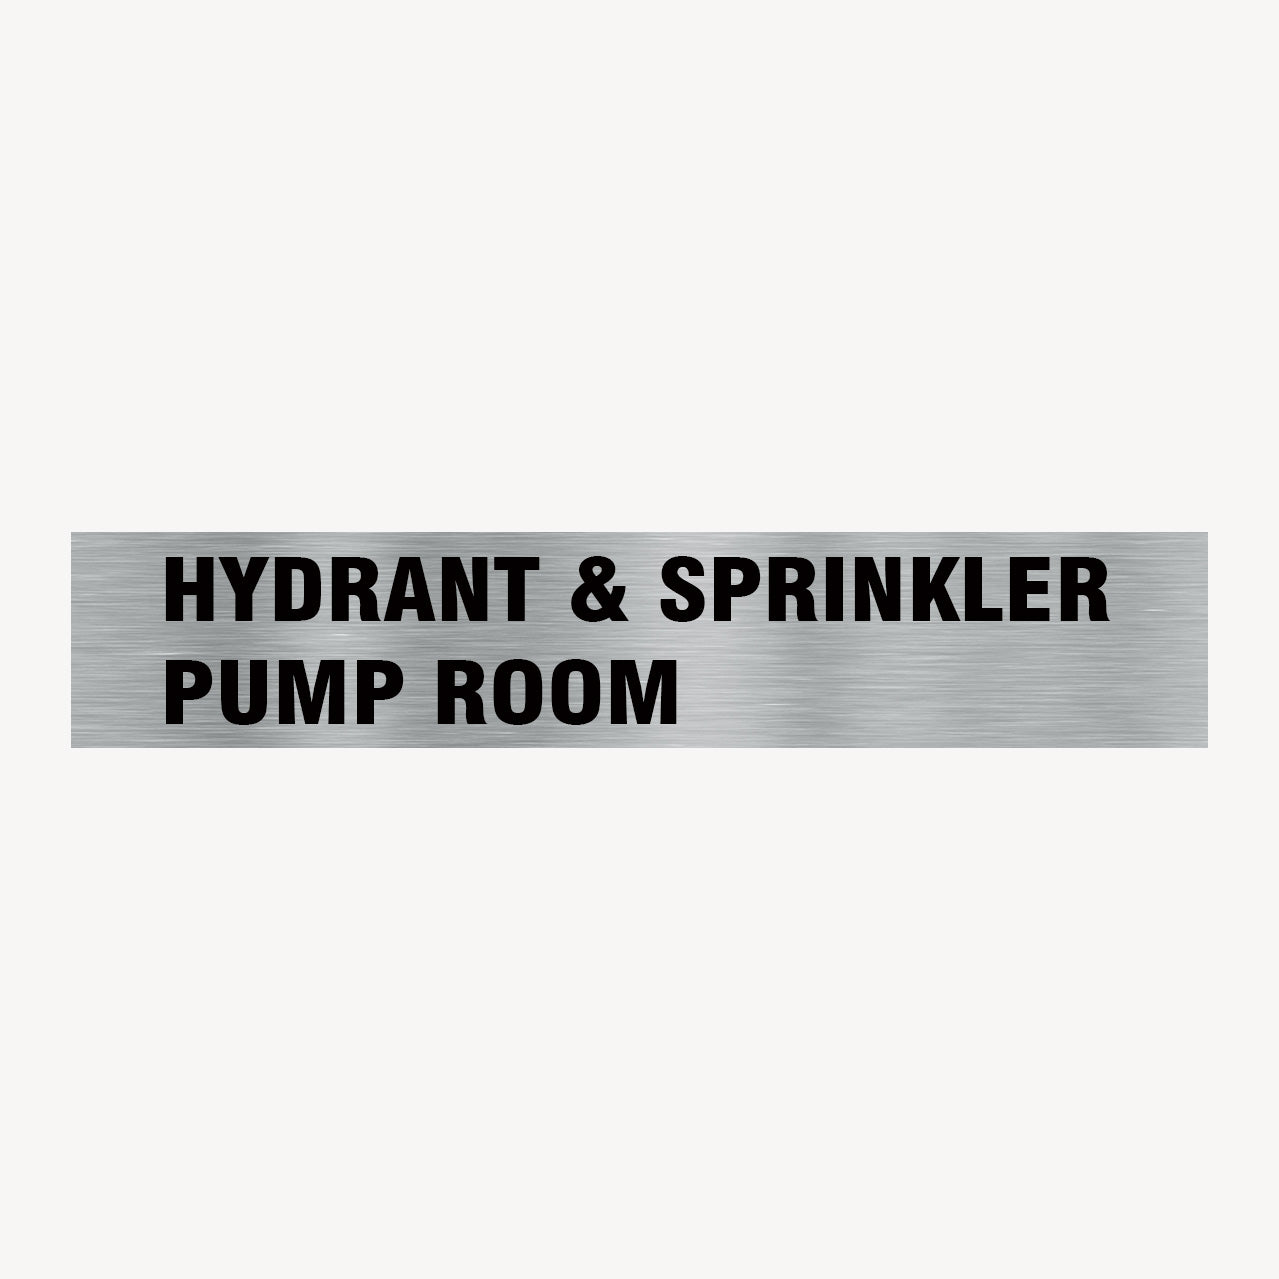 HYDRANT & SPRINKLER PUMP ROOM SIGN - statutory signs at Get Signs